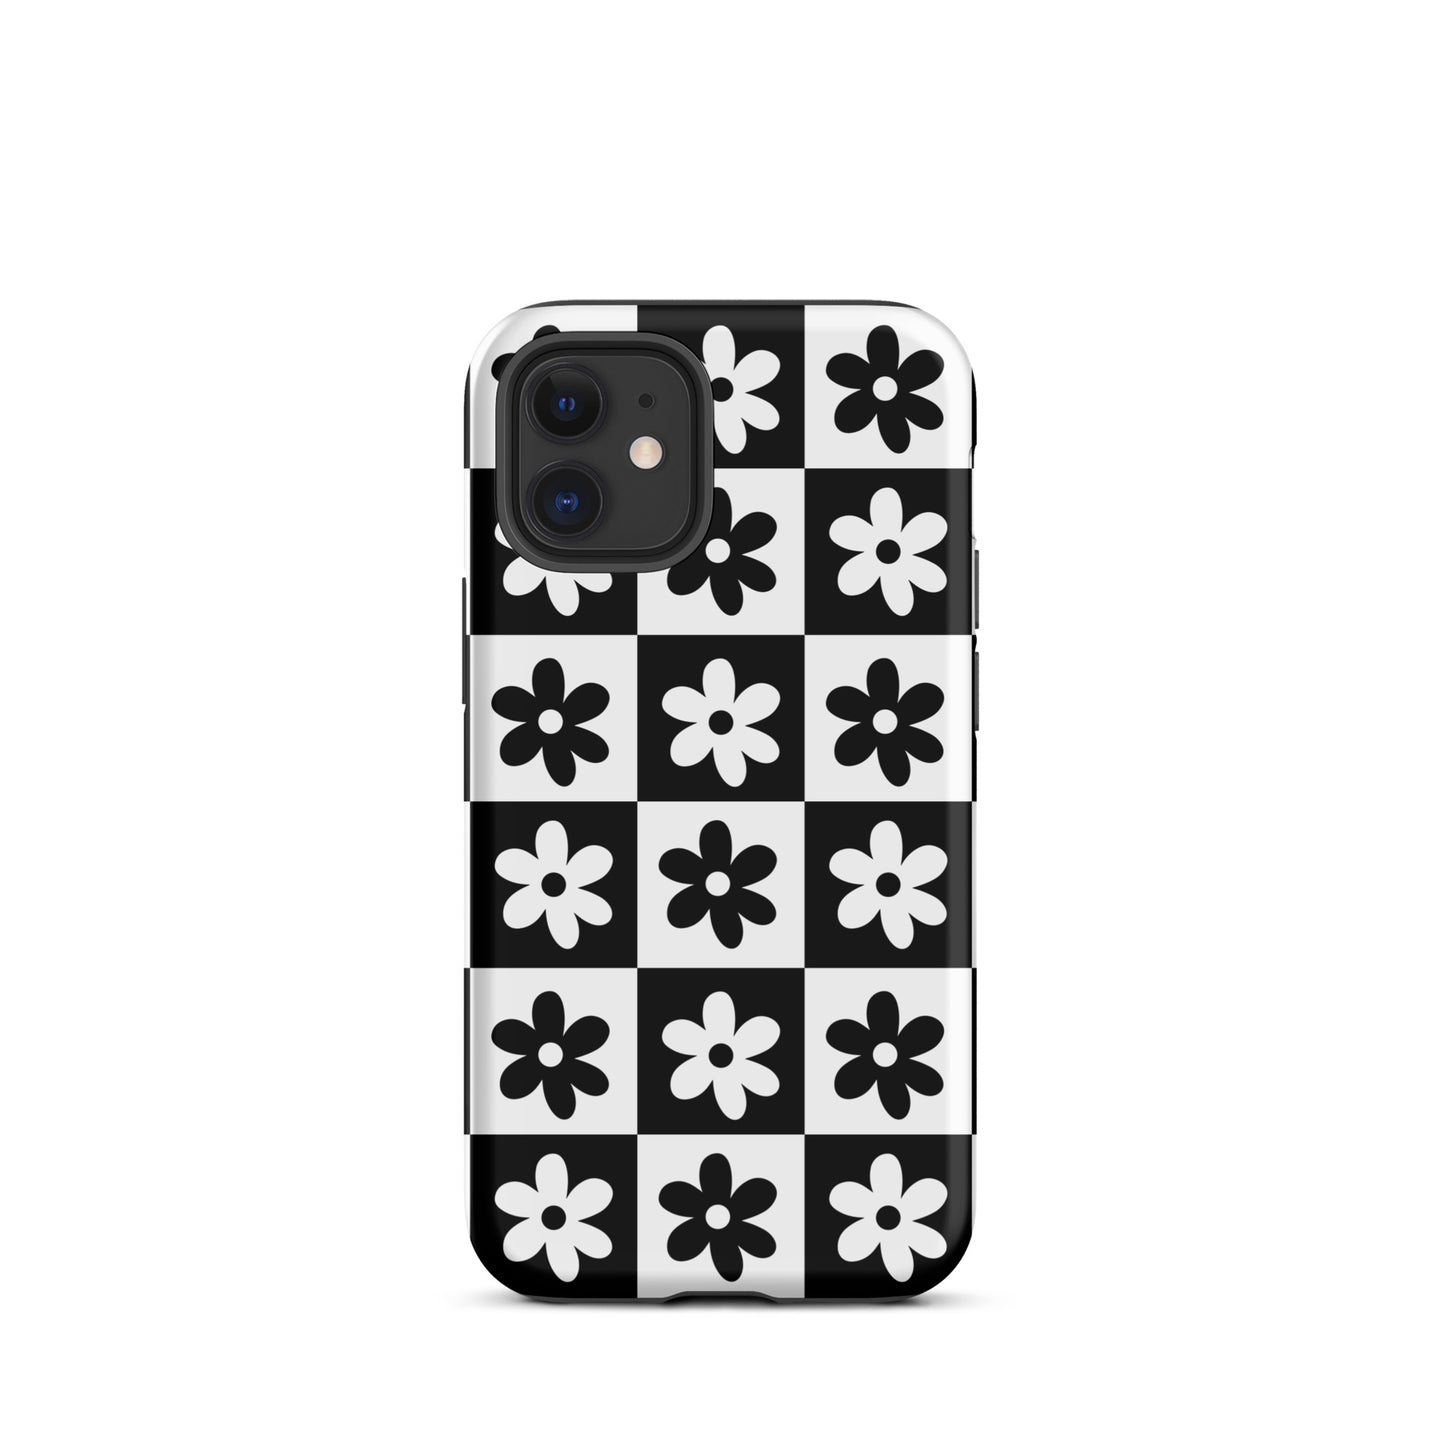 Black & White Garden iPhone Case iPhone 12 mini Matte